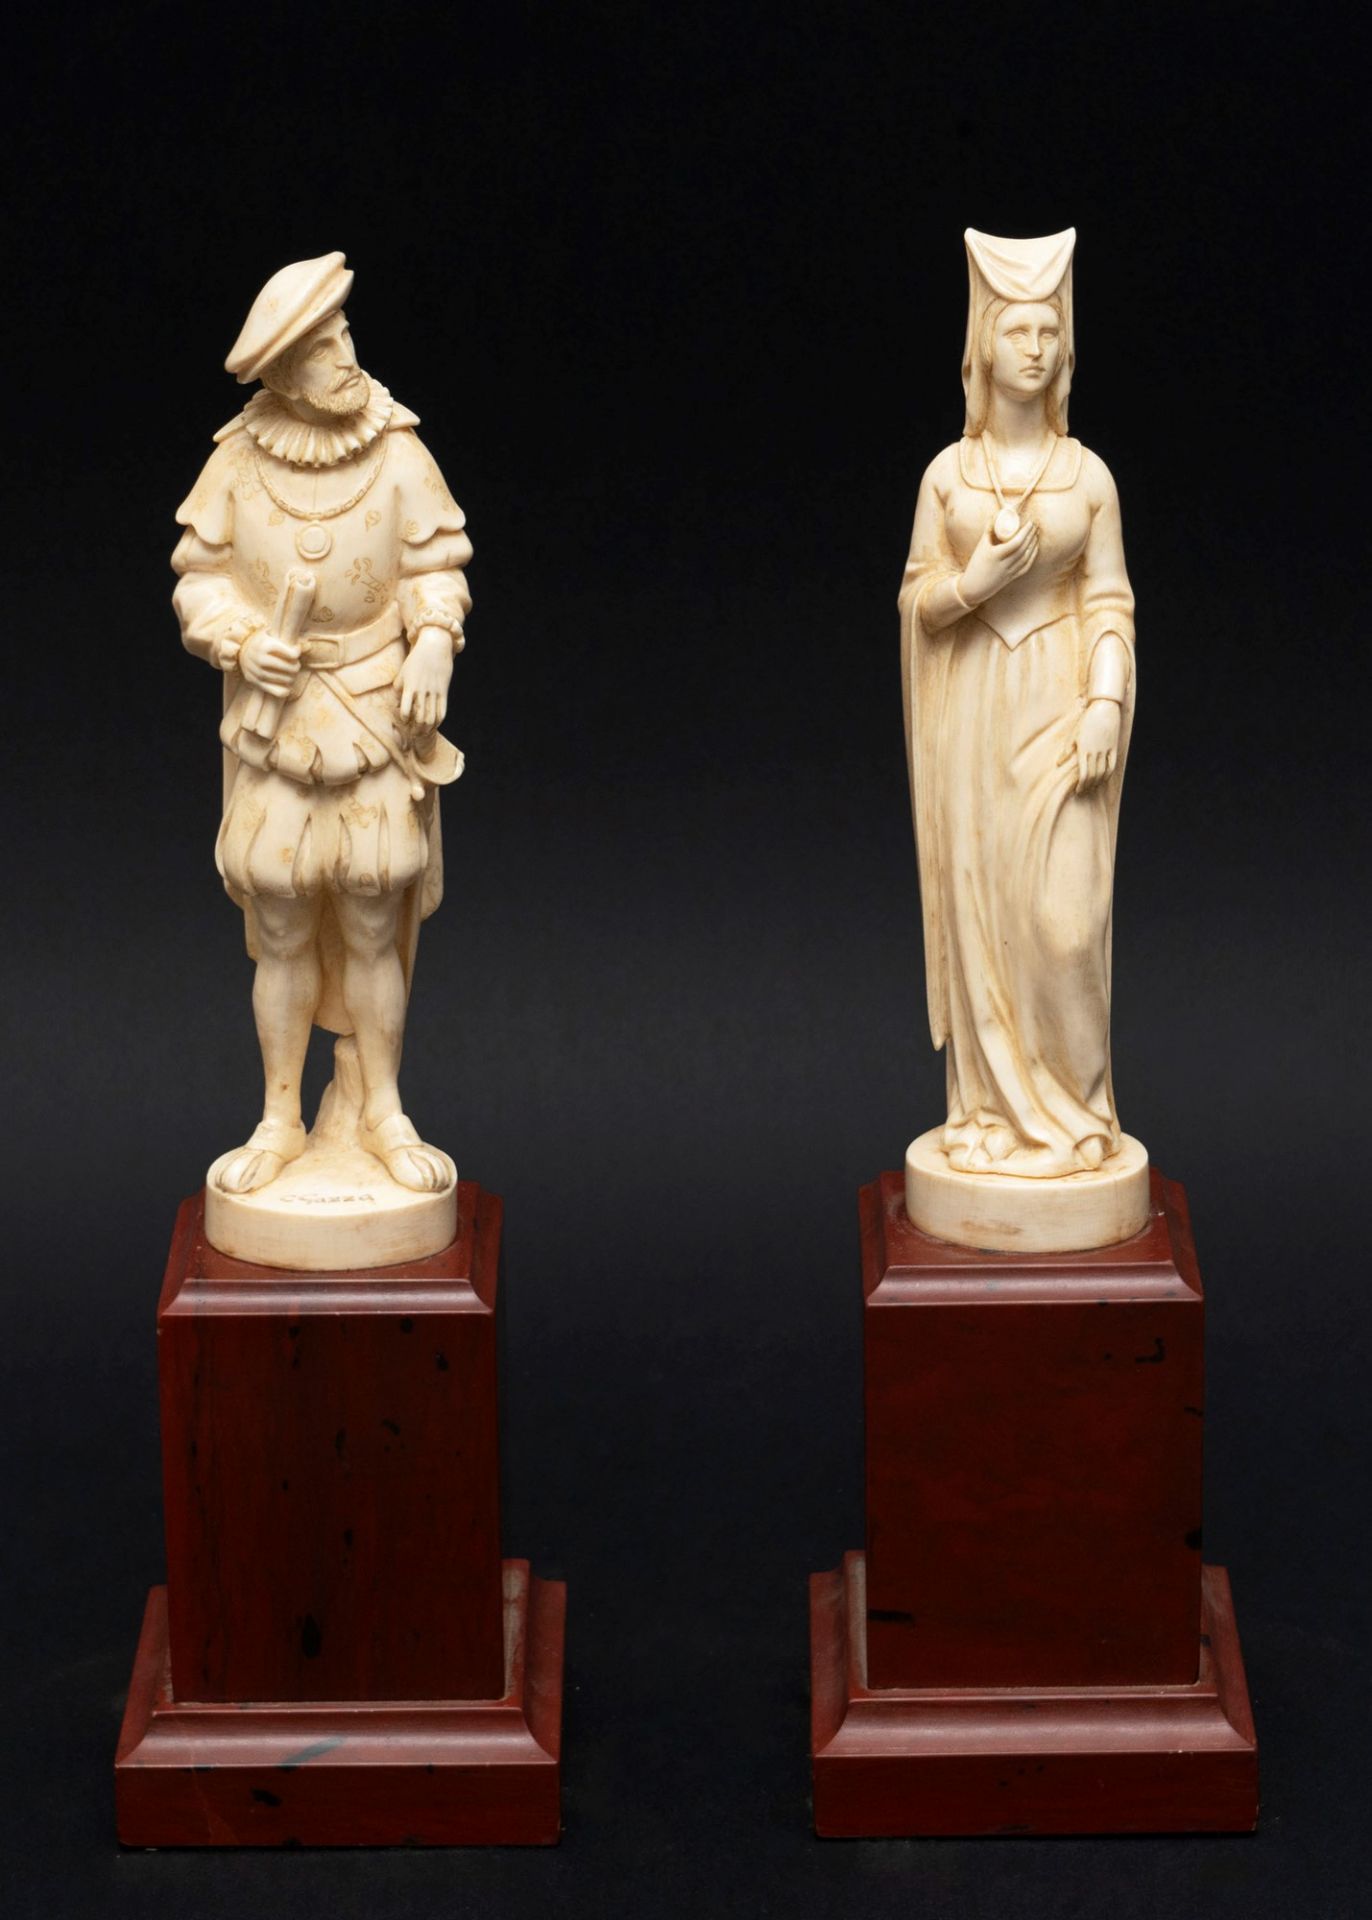 Italian school, XIX century - ☼ Pair of ivory sculptures depicting a nobleman and noblewoman in Rena